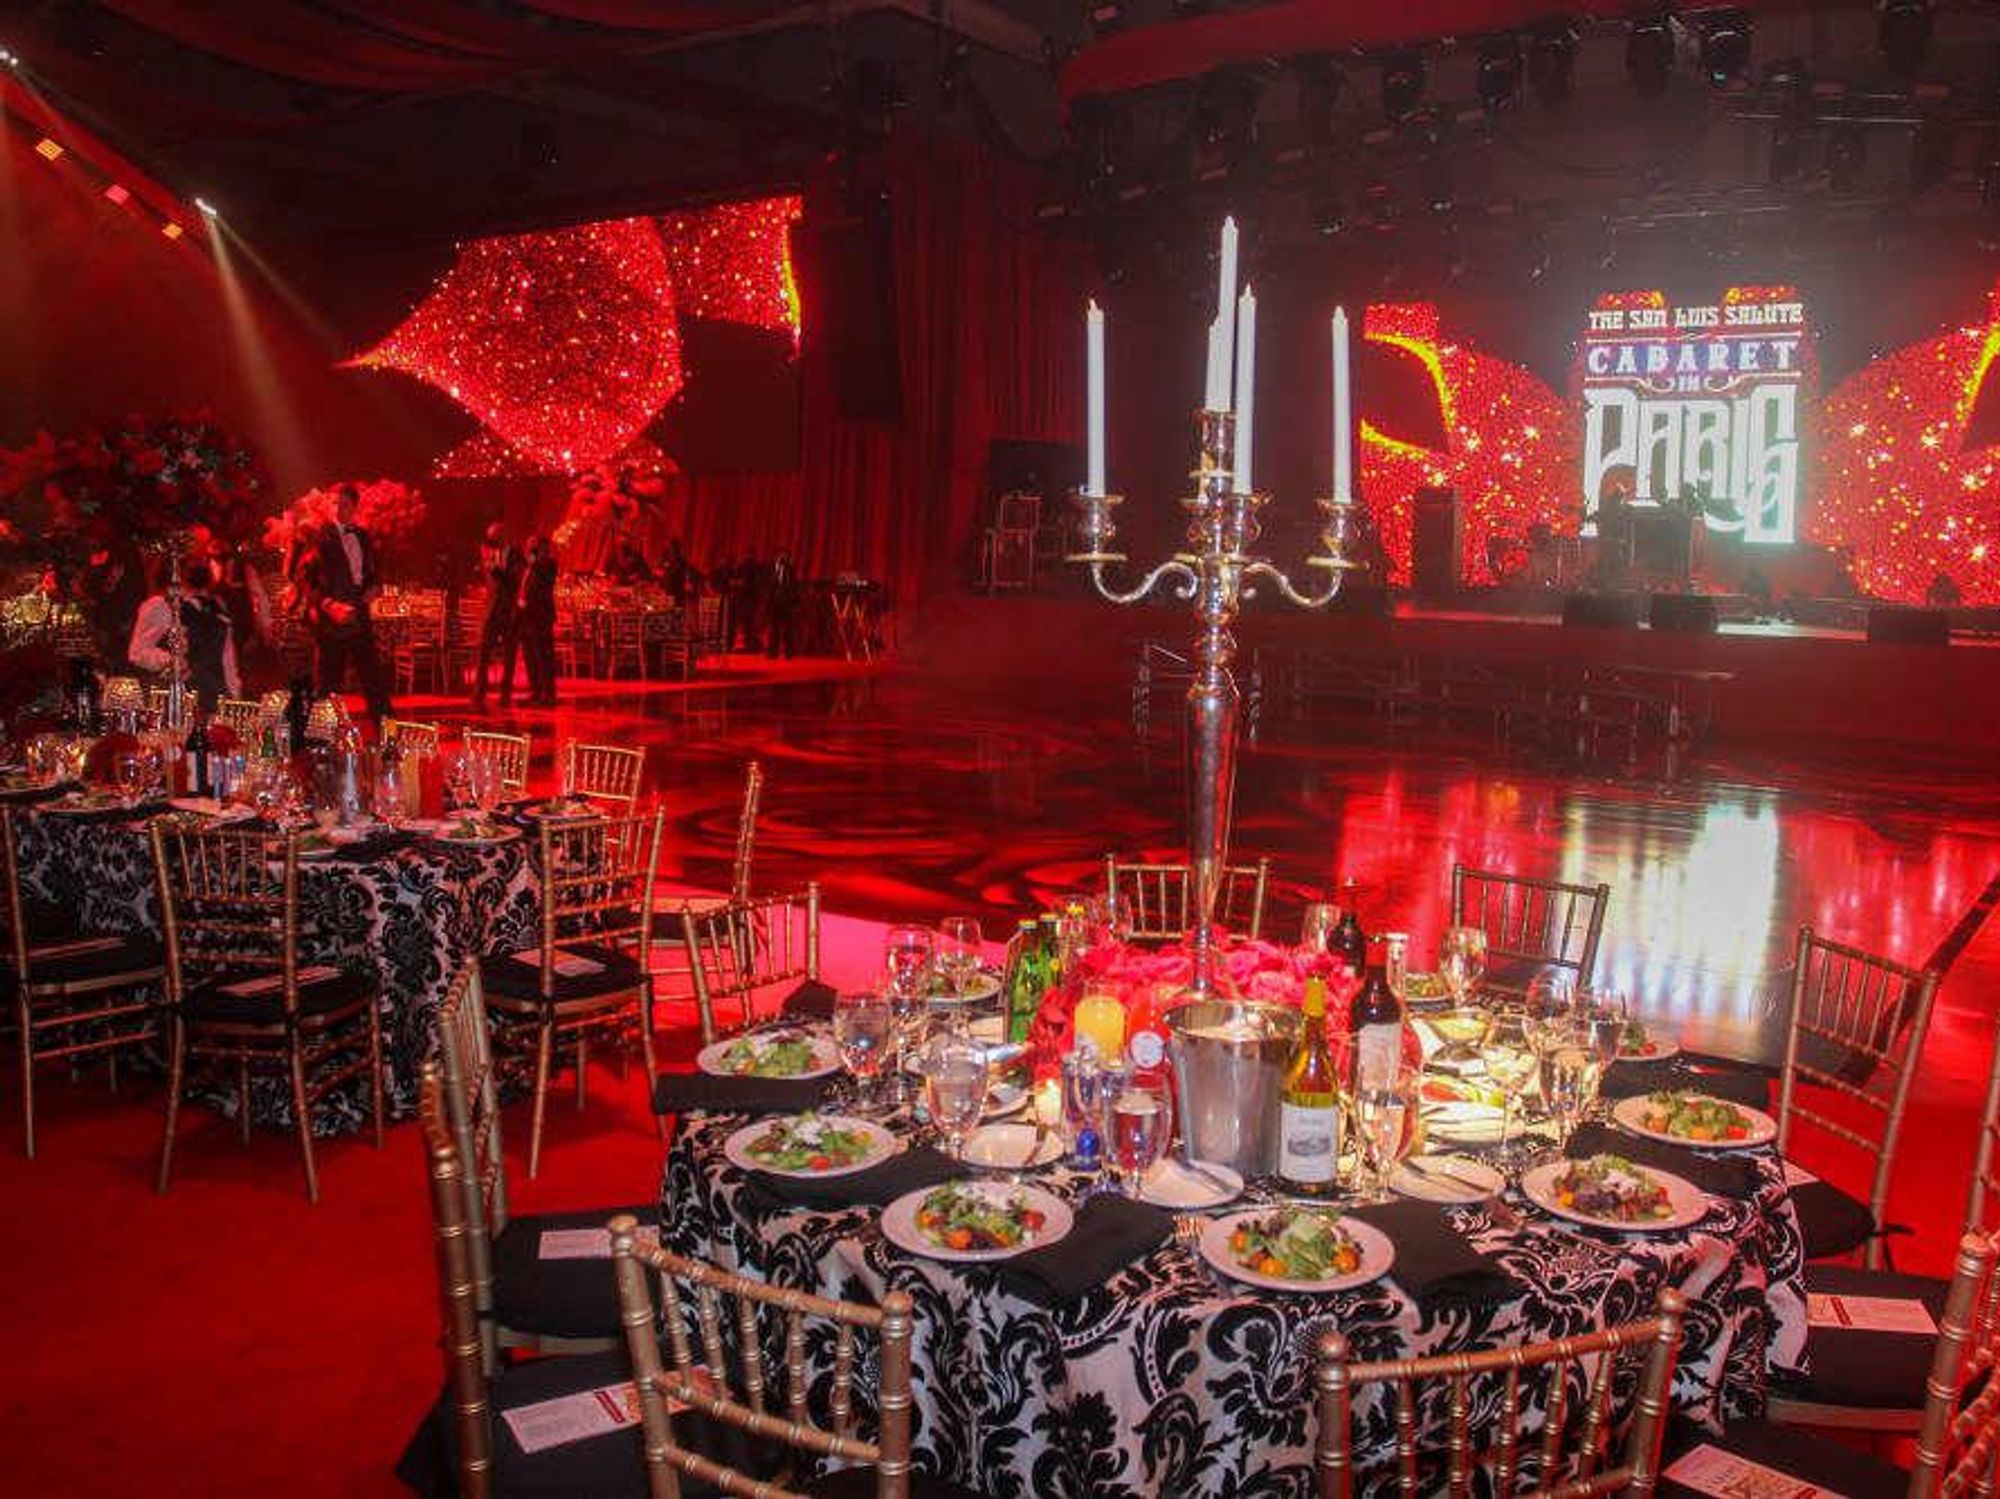 The crimson-adorned ballroom.